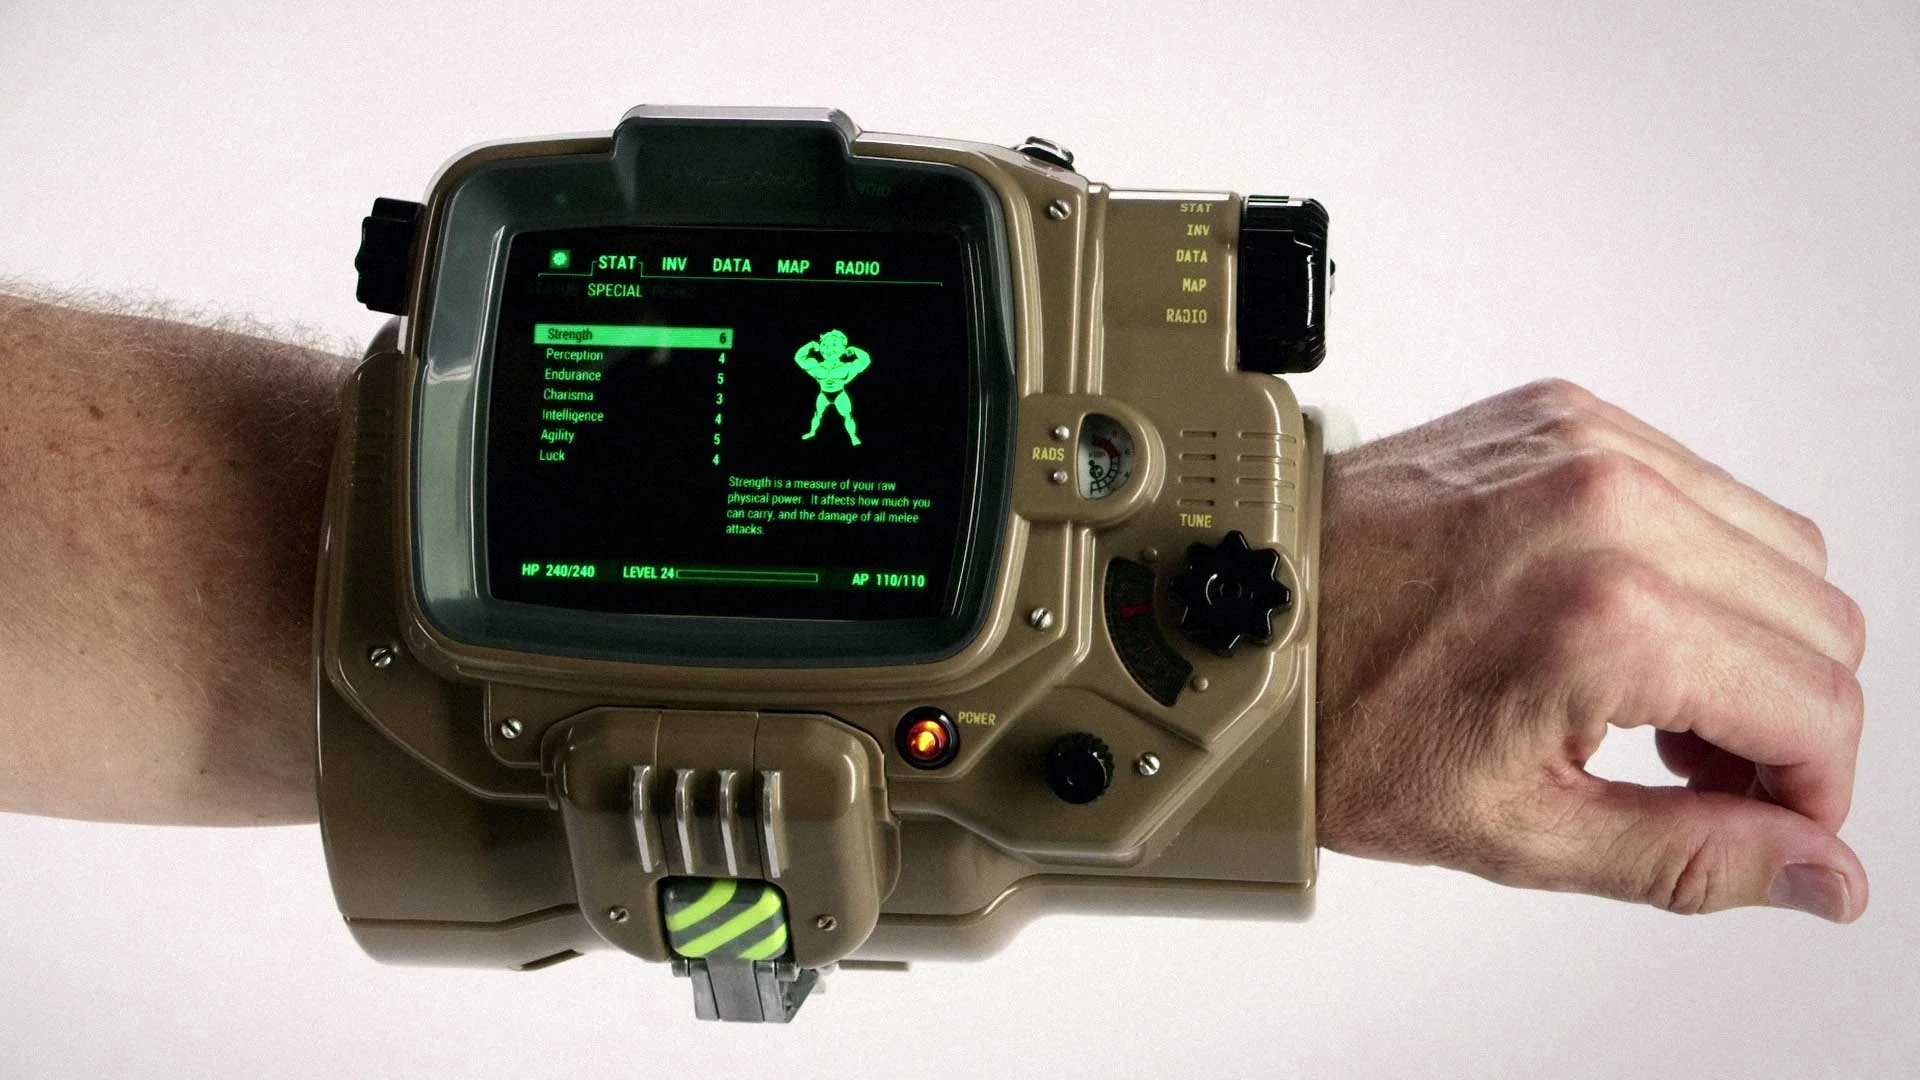 
Все о Fallout 4: дата выхода, видео, подробности, версия для iPad - фото 2